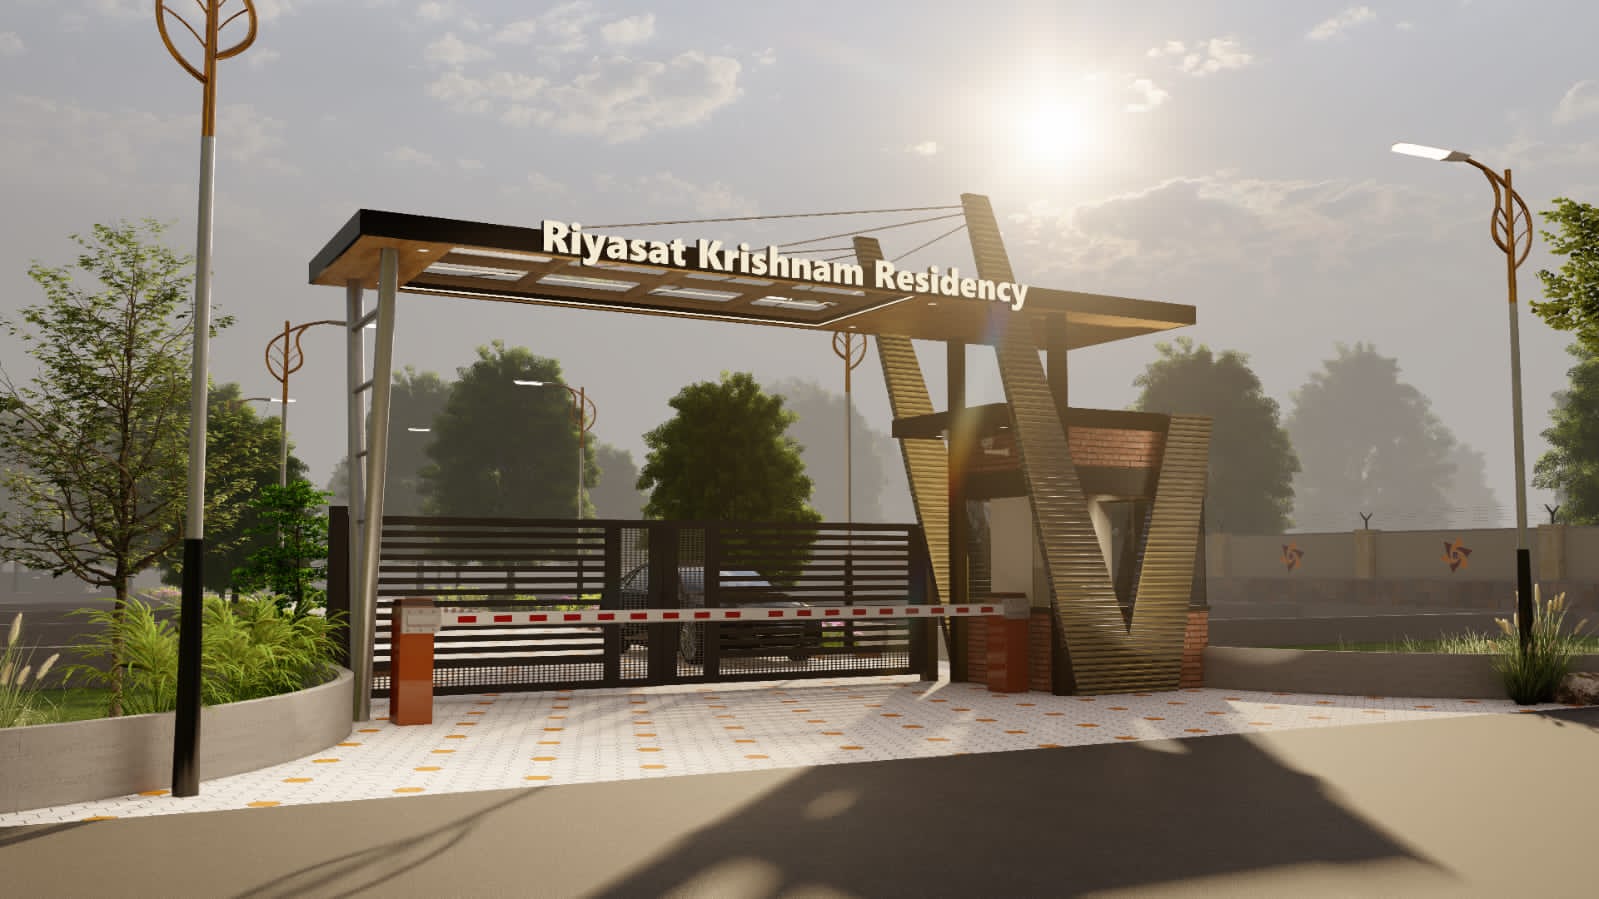 Riyasat krishnam residency new block